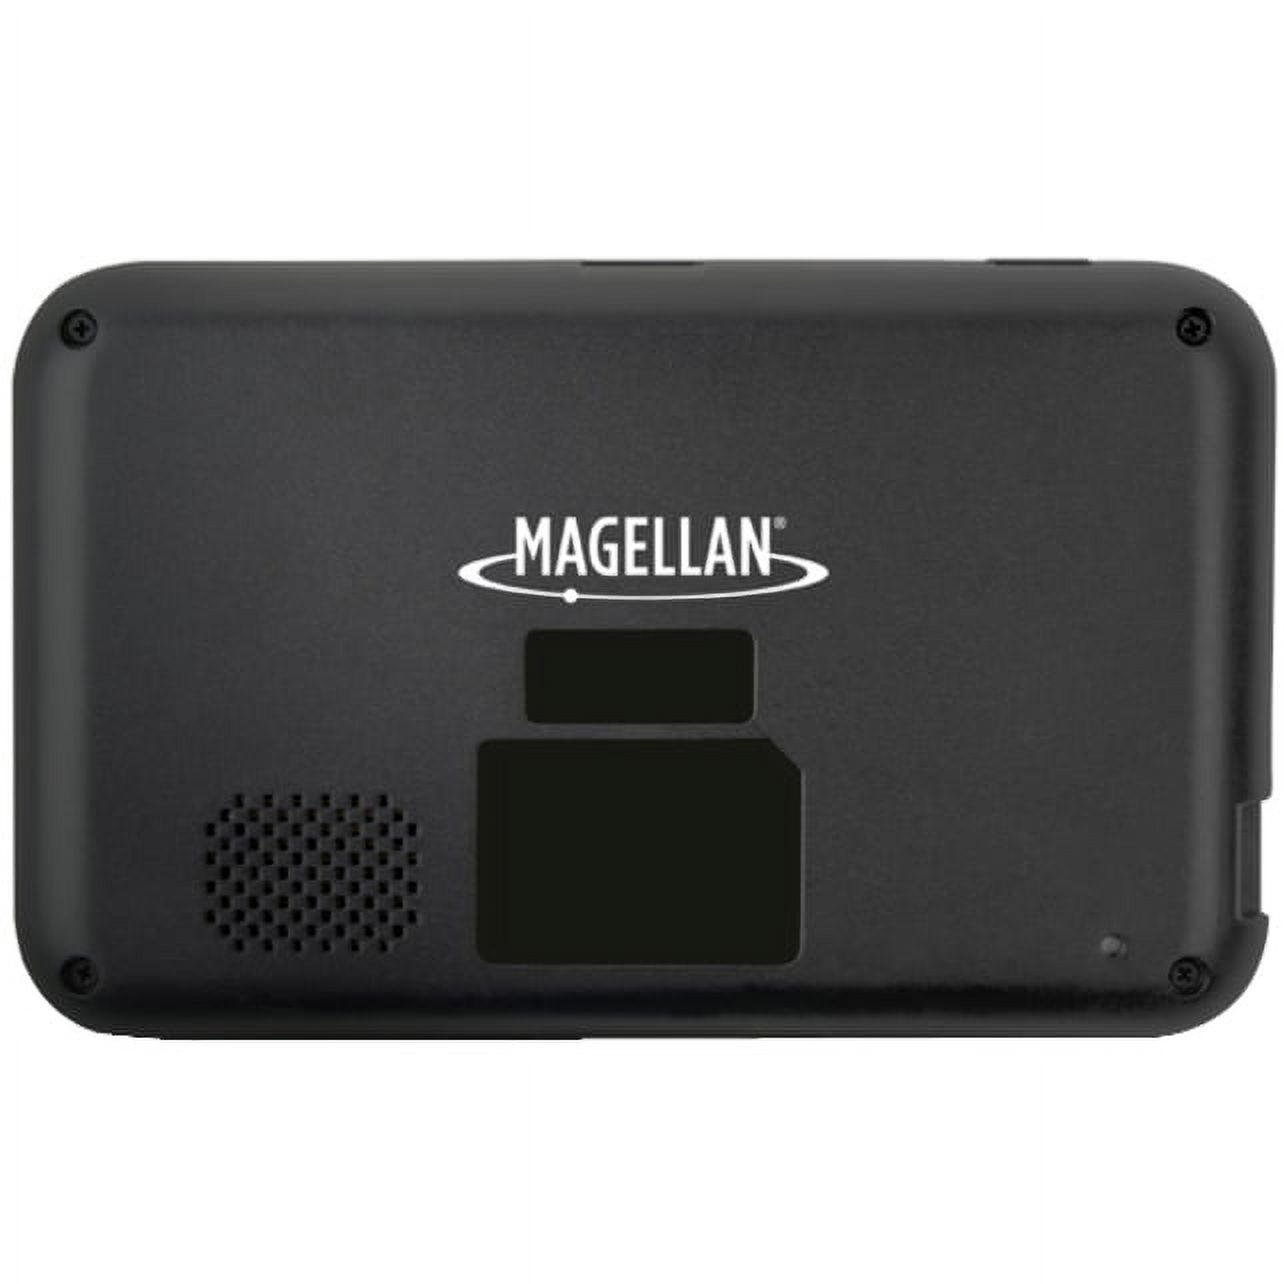 Magellan RoadMate 2220-LM Automobile Portable GPS Navigator - image 2 of 4